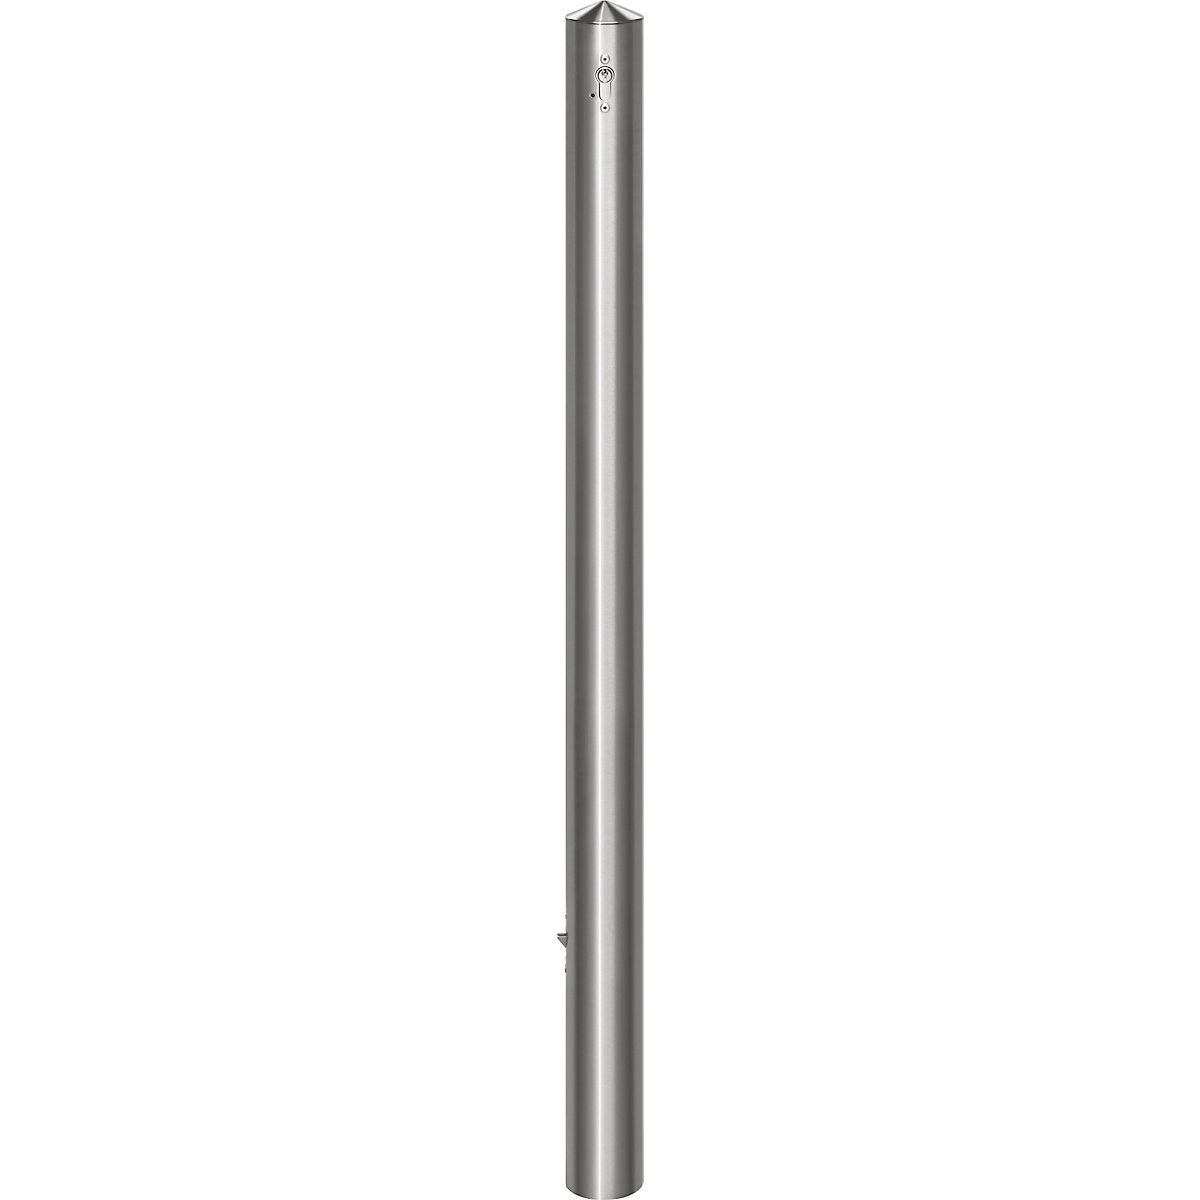 Zahradzovací stĺpik z ušľachtilej ocele, s hlavou s hrotom, na zabetónovanie, s podlahovou kotvou, Ø 76 mm, profilový cylindrický zámok-11